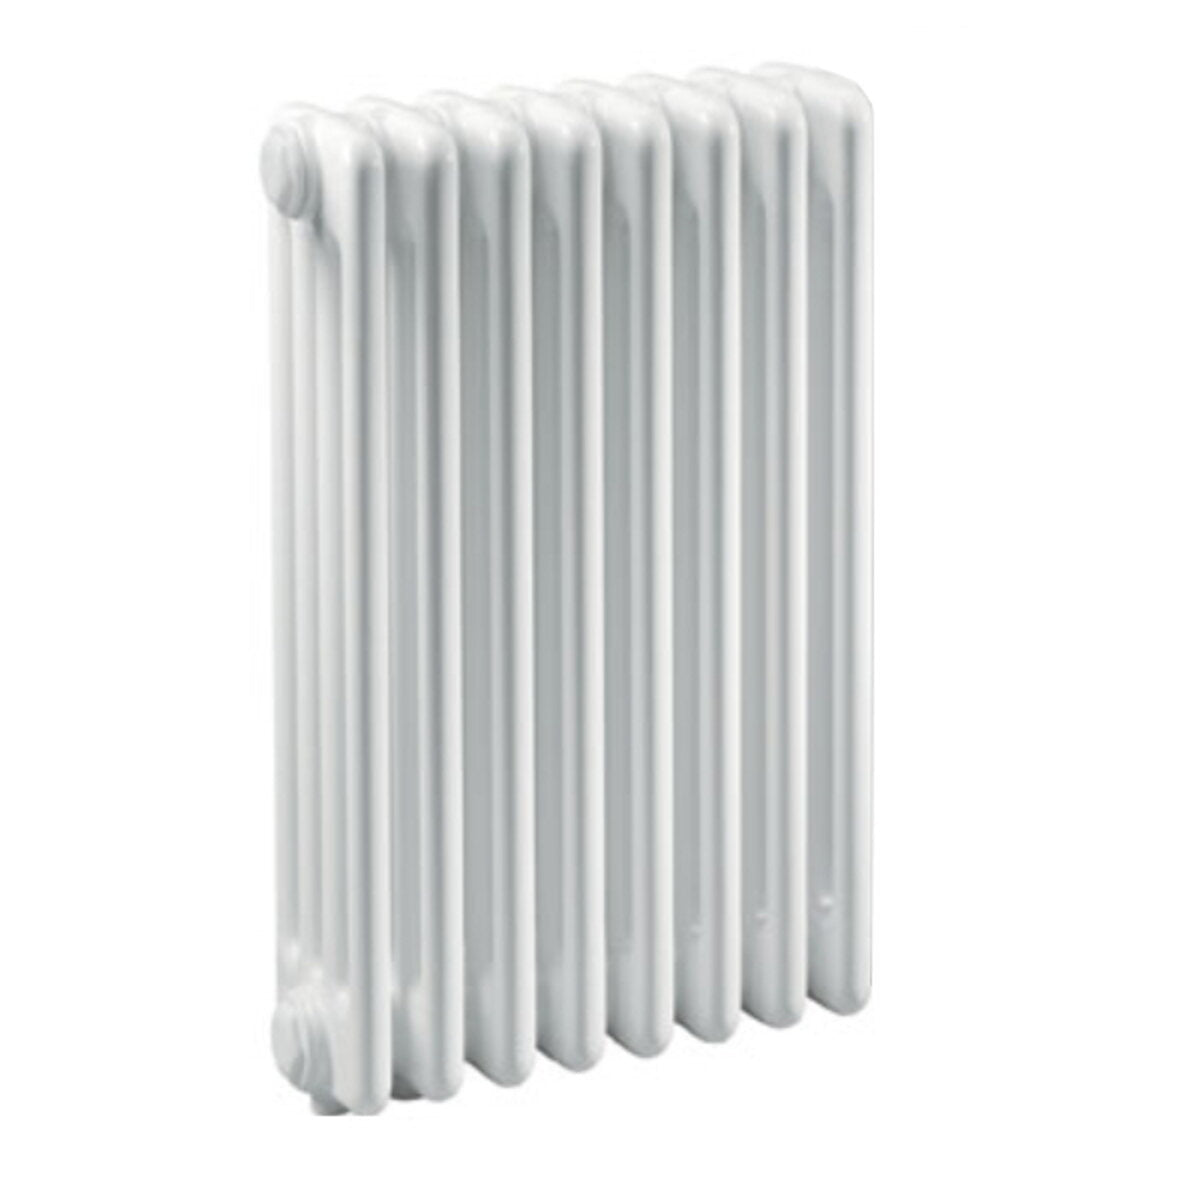 Ercos Comby steel column radiator 8 elements 3 columns center distance 1435 mm